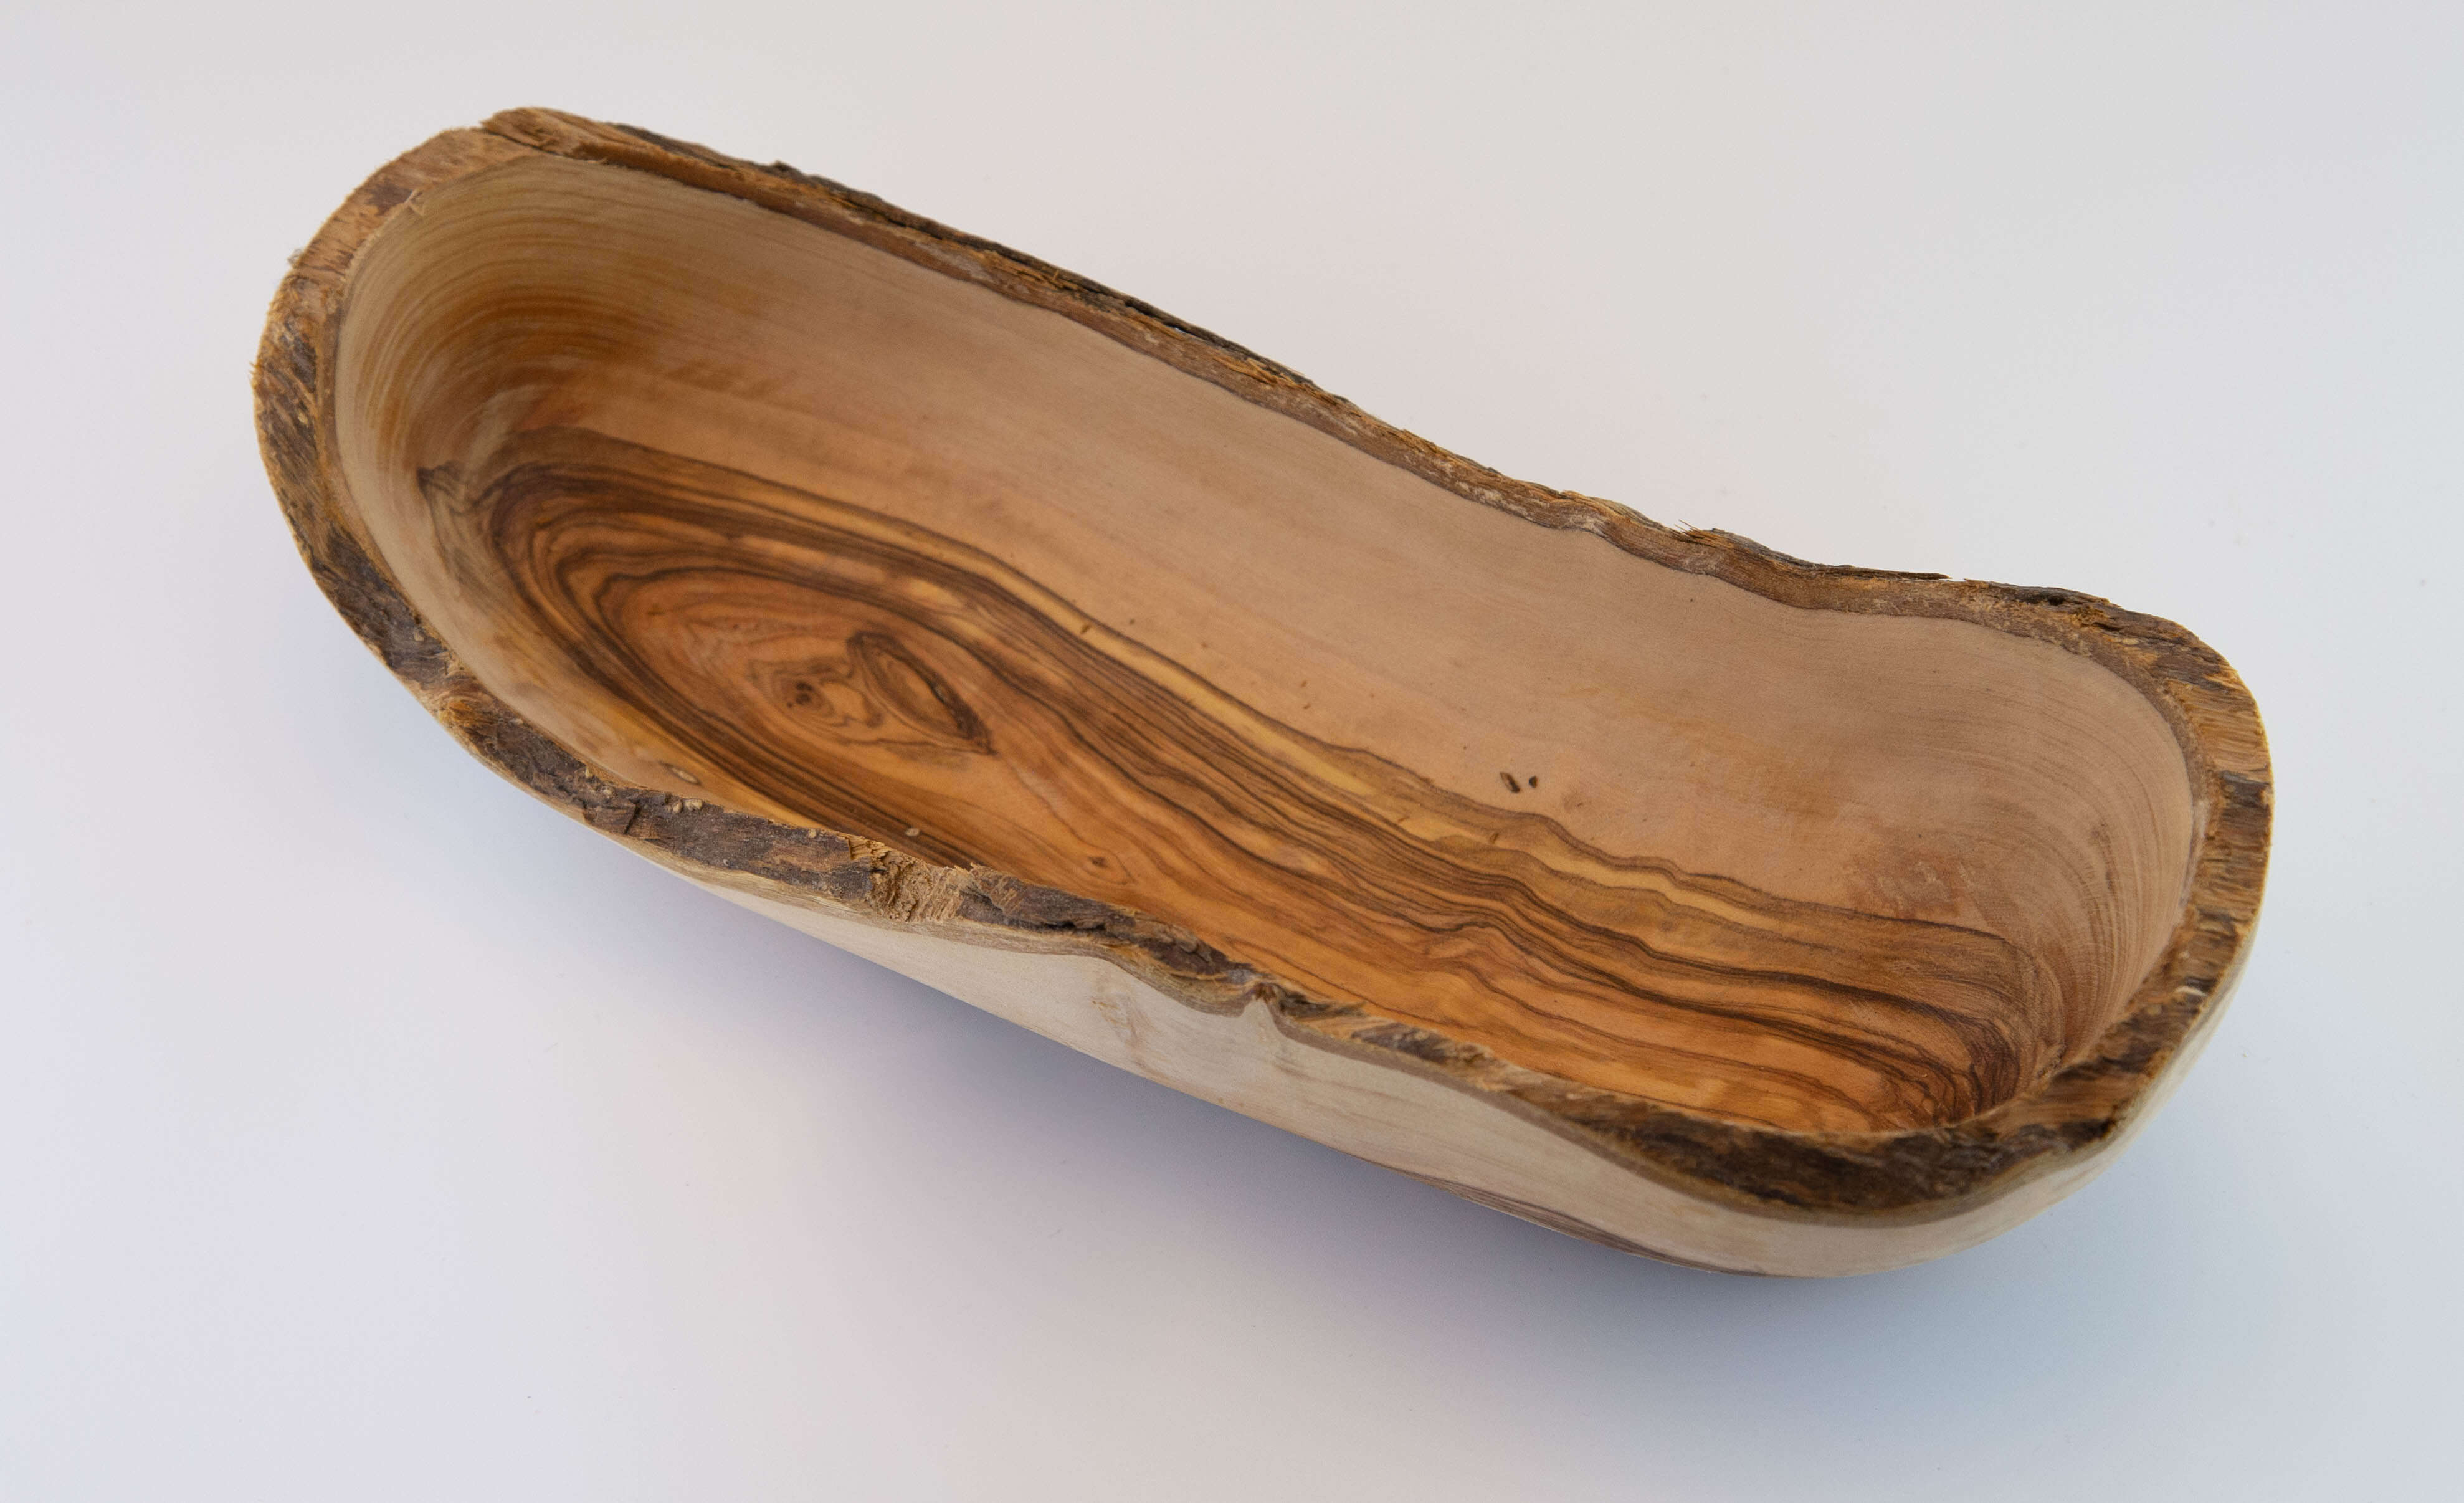 Rustic oval bowl 12-14 cm.